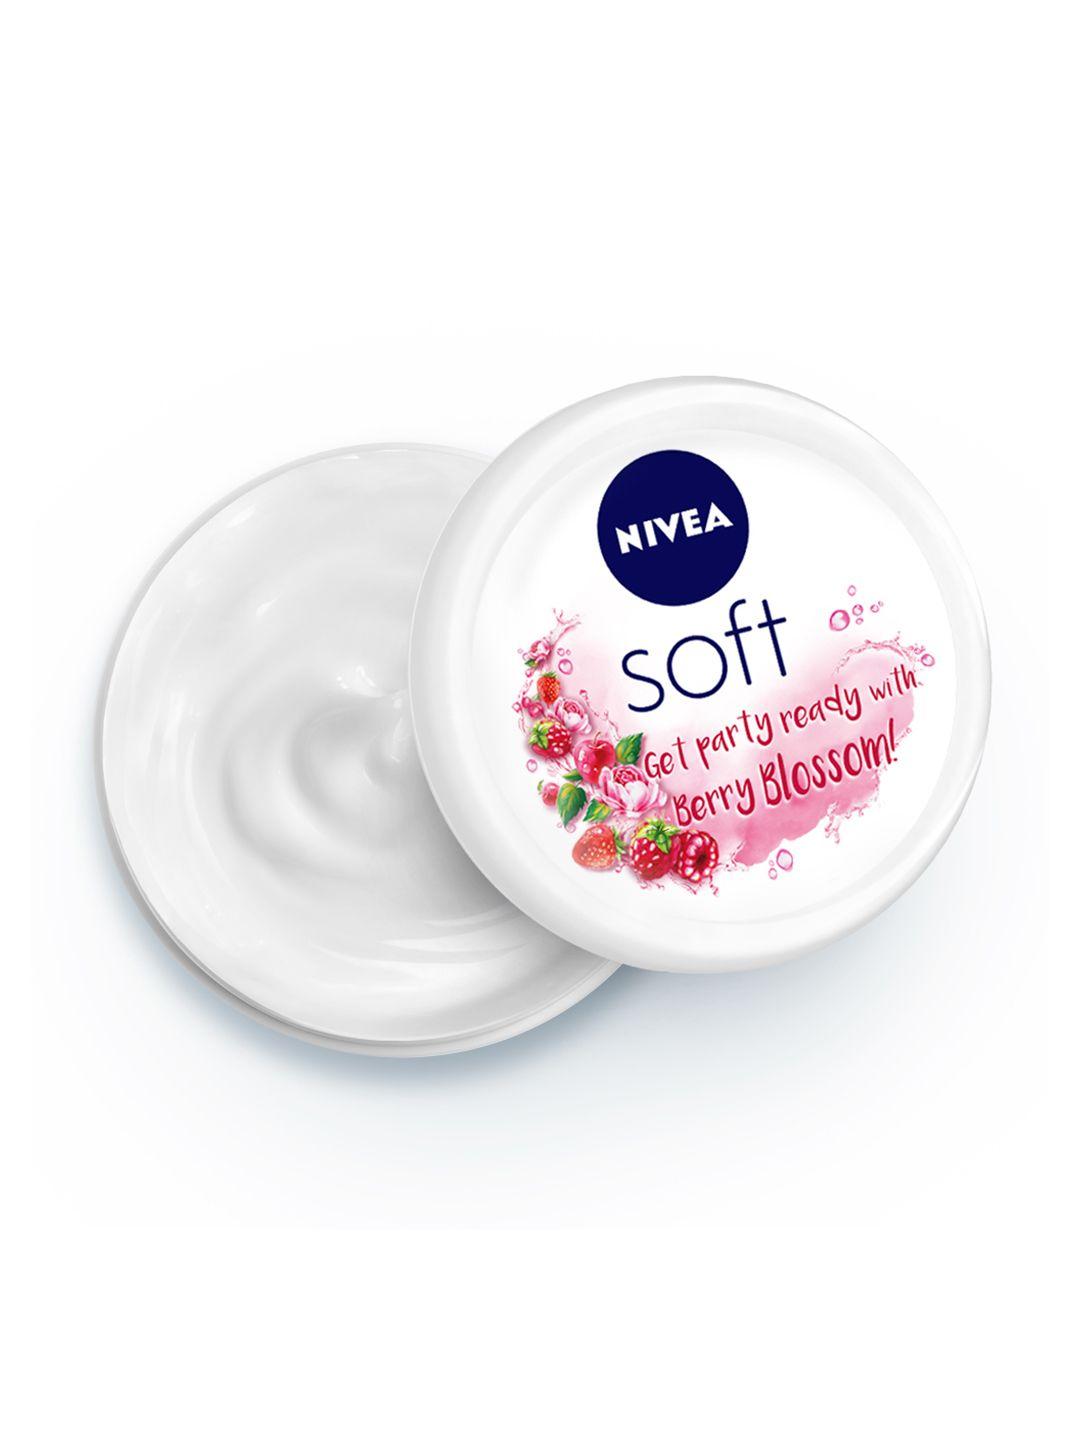 nivea soft berry blossom light moisturizer with jojoba oil & vitamin e - 50ml